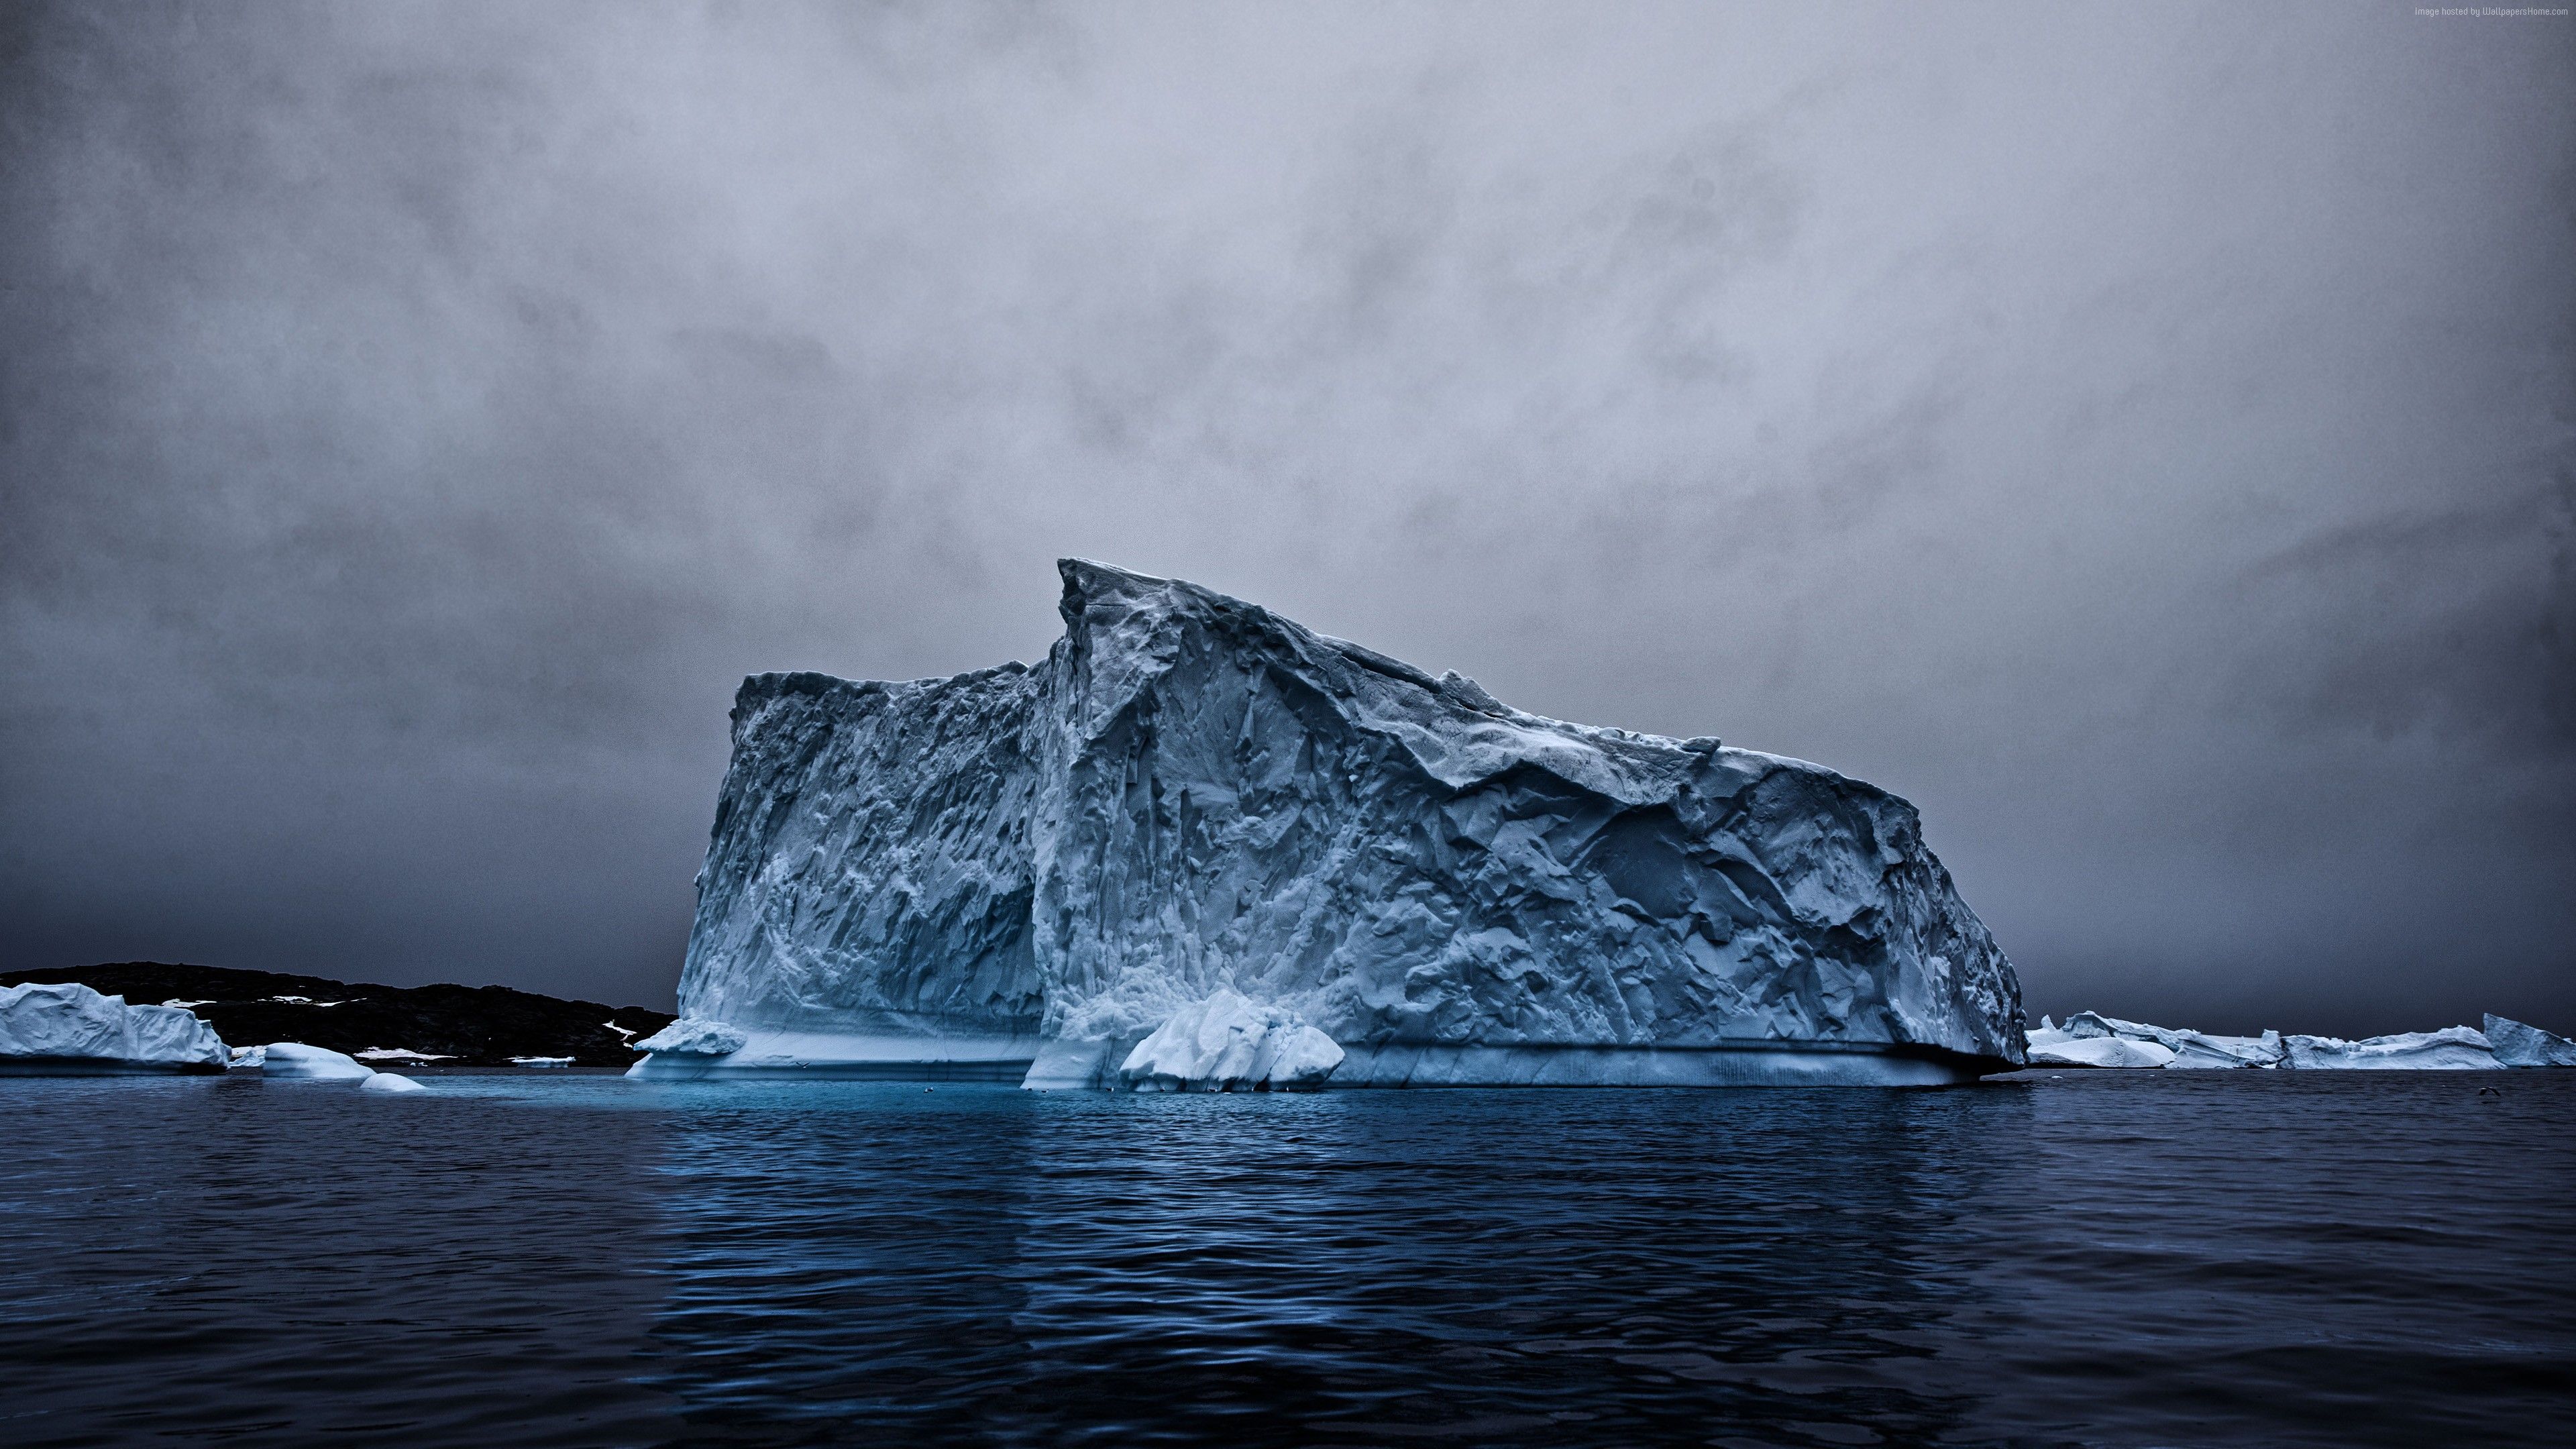 Iceberg in the ocean, dark clouds, 5K wallpaper - Travel